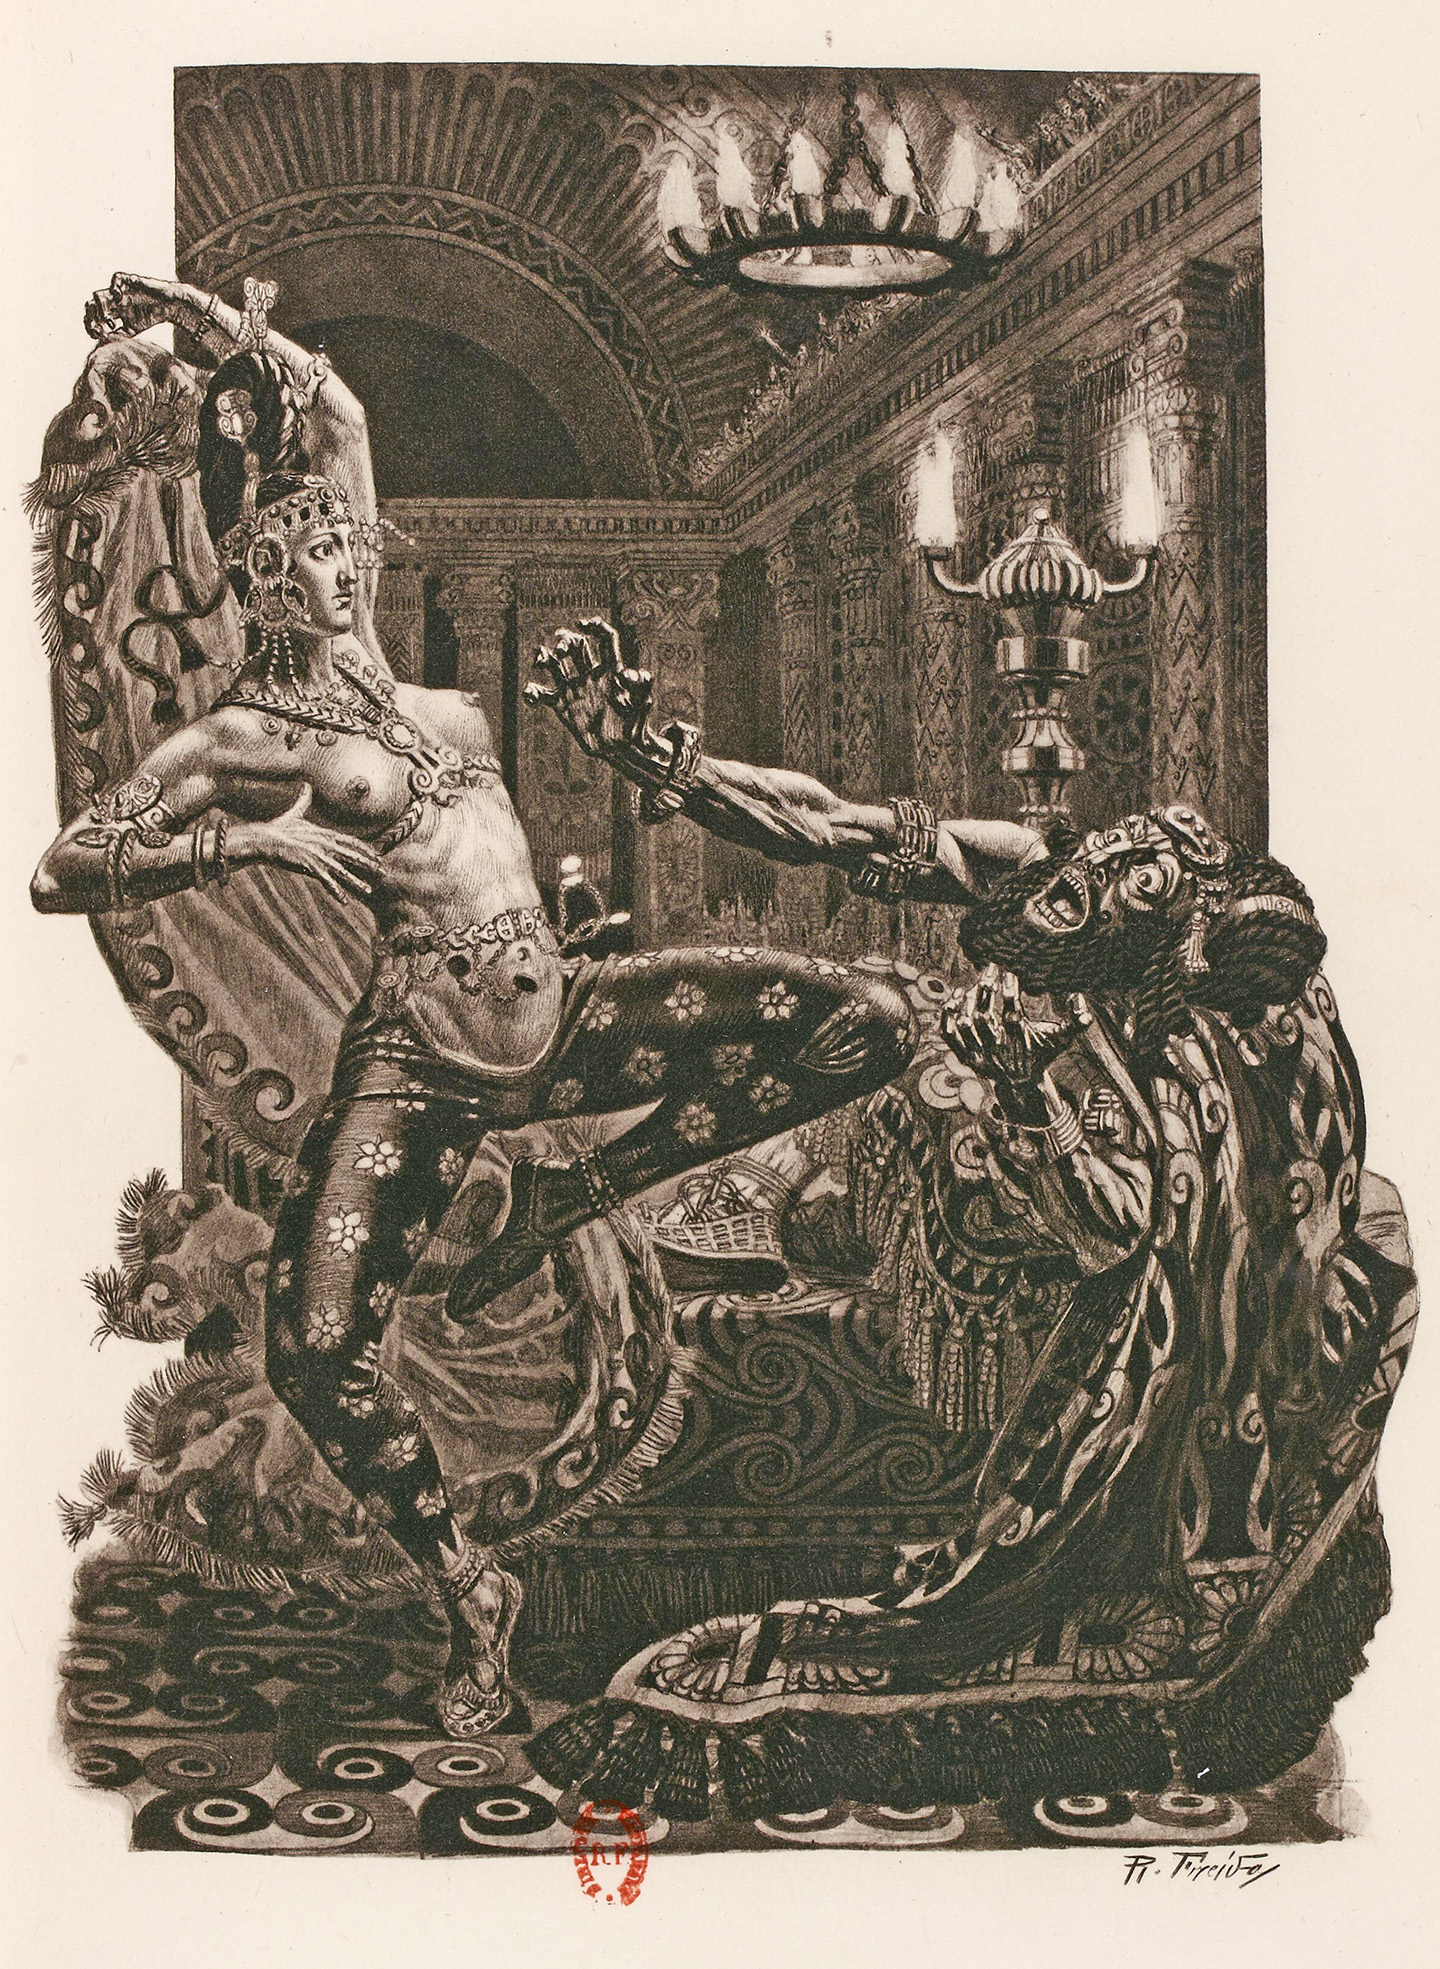 Illustrations de Raphaël Freida dans Hérodias de Gustave Flaubert
1926 - Gallica ark:/12148/bpt6k15241290